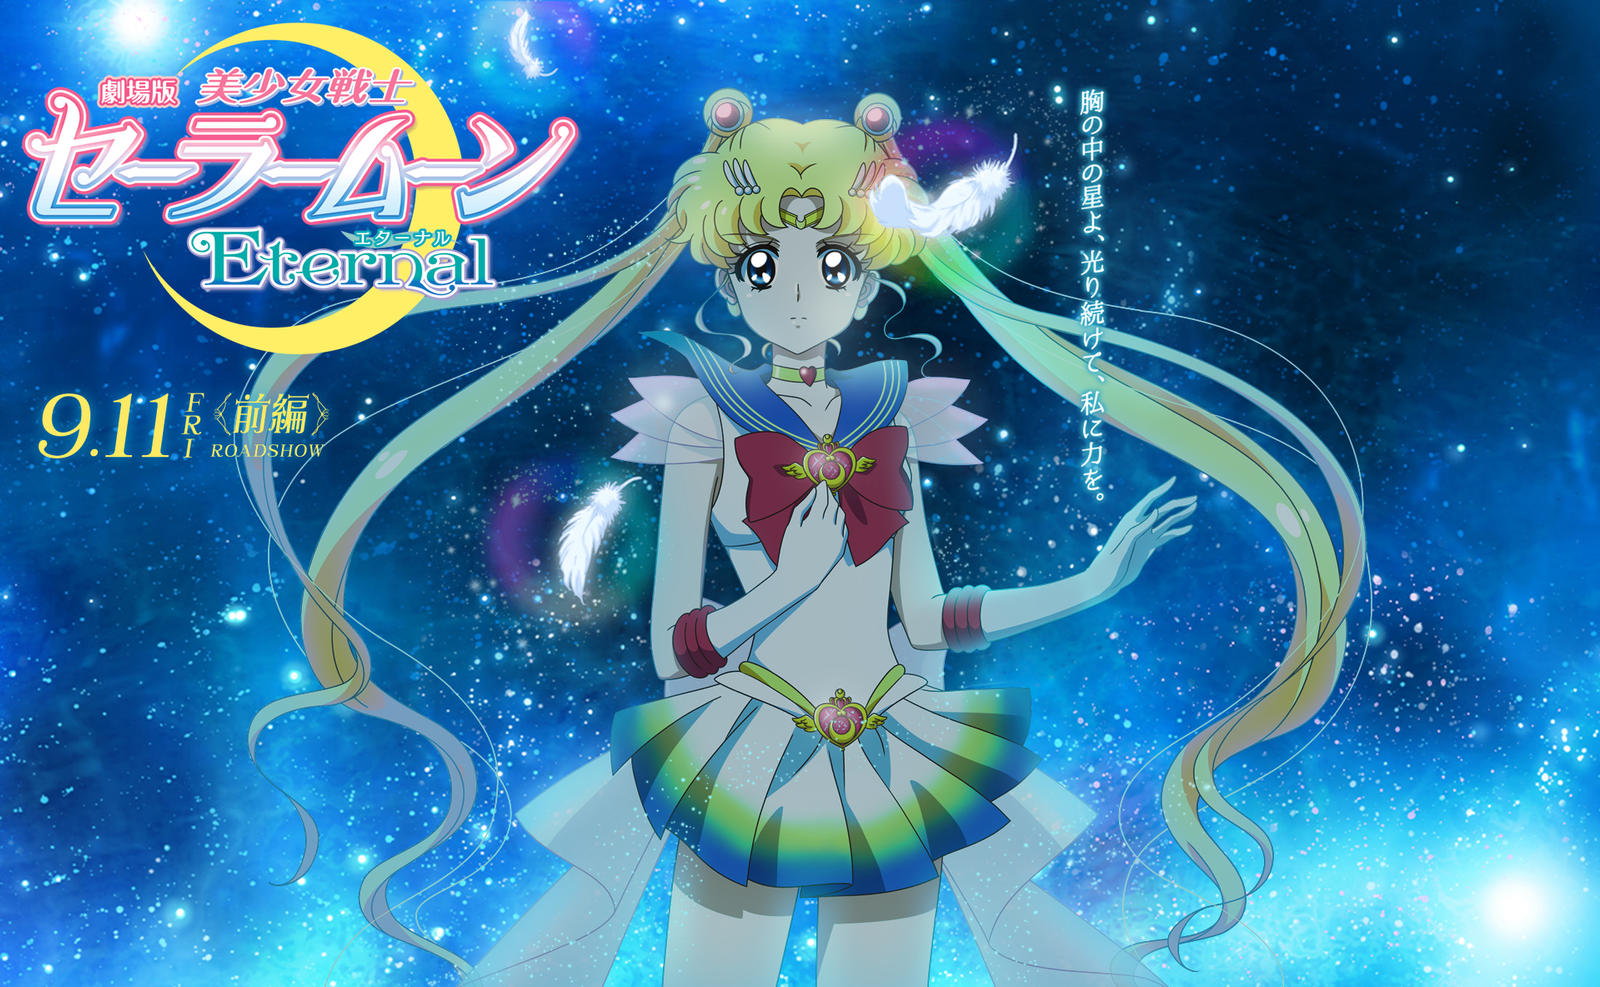 Sailor Moon Crystal Season 3 - Inner Senshi by xuweisen on DeviantArt